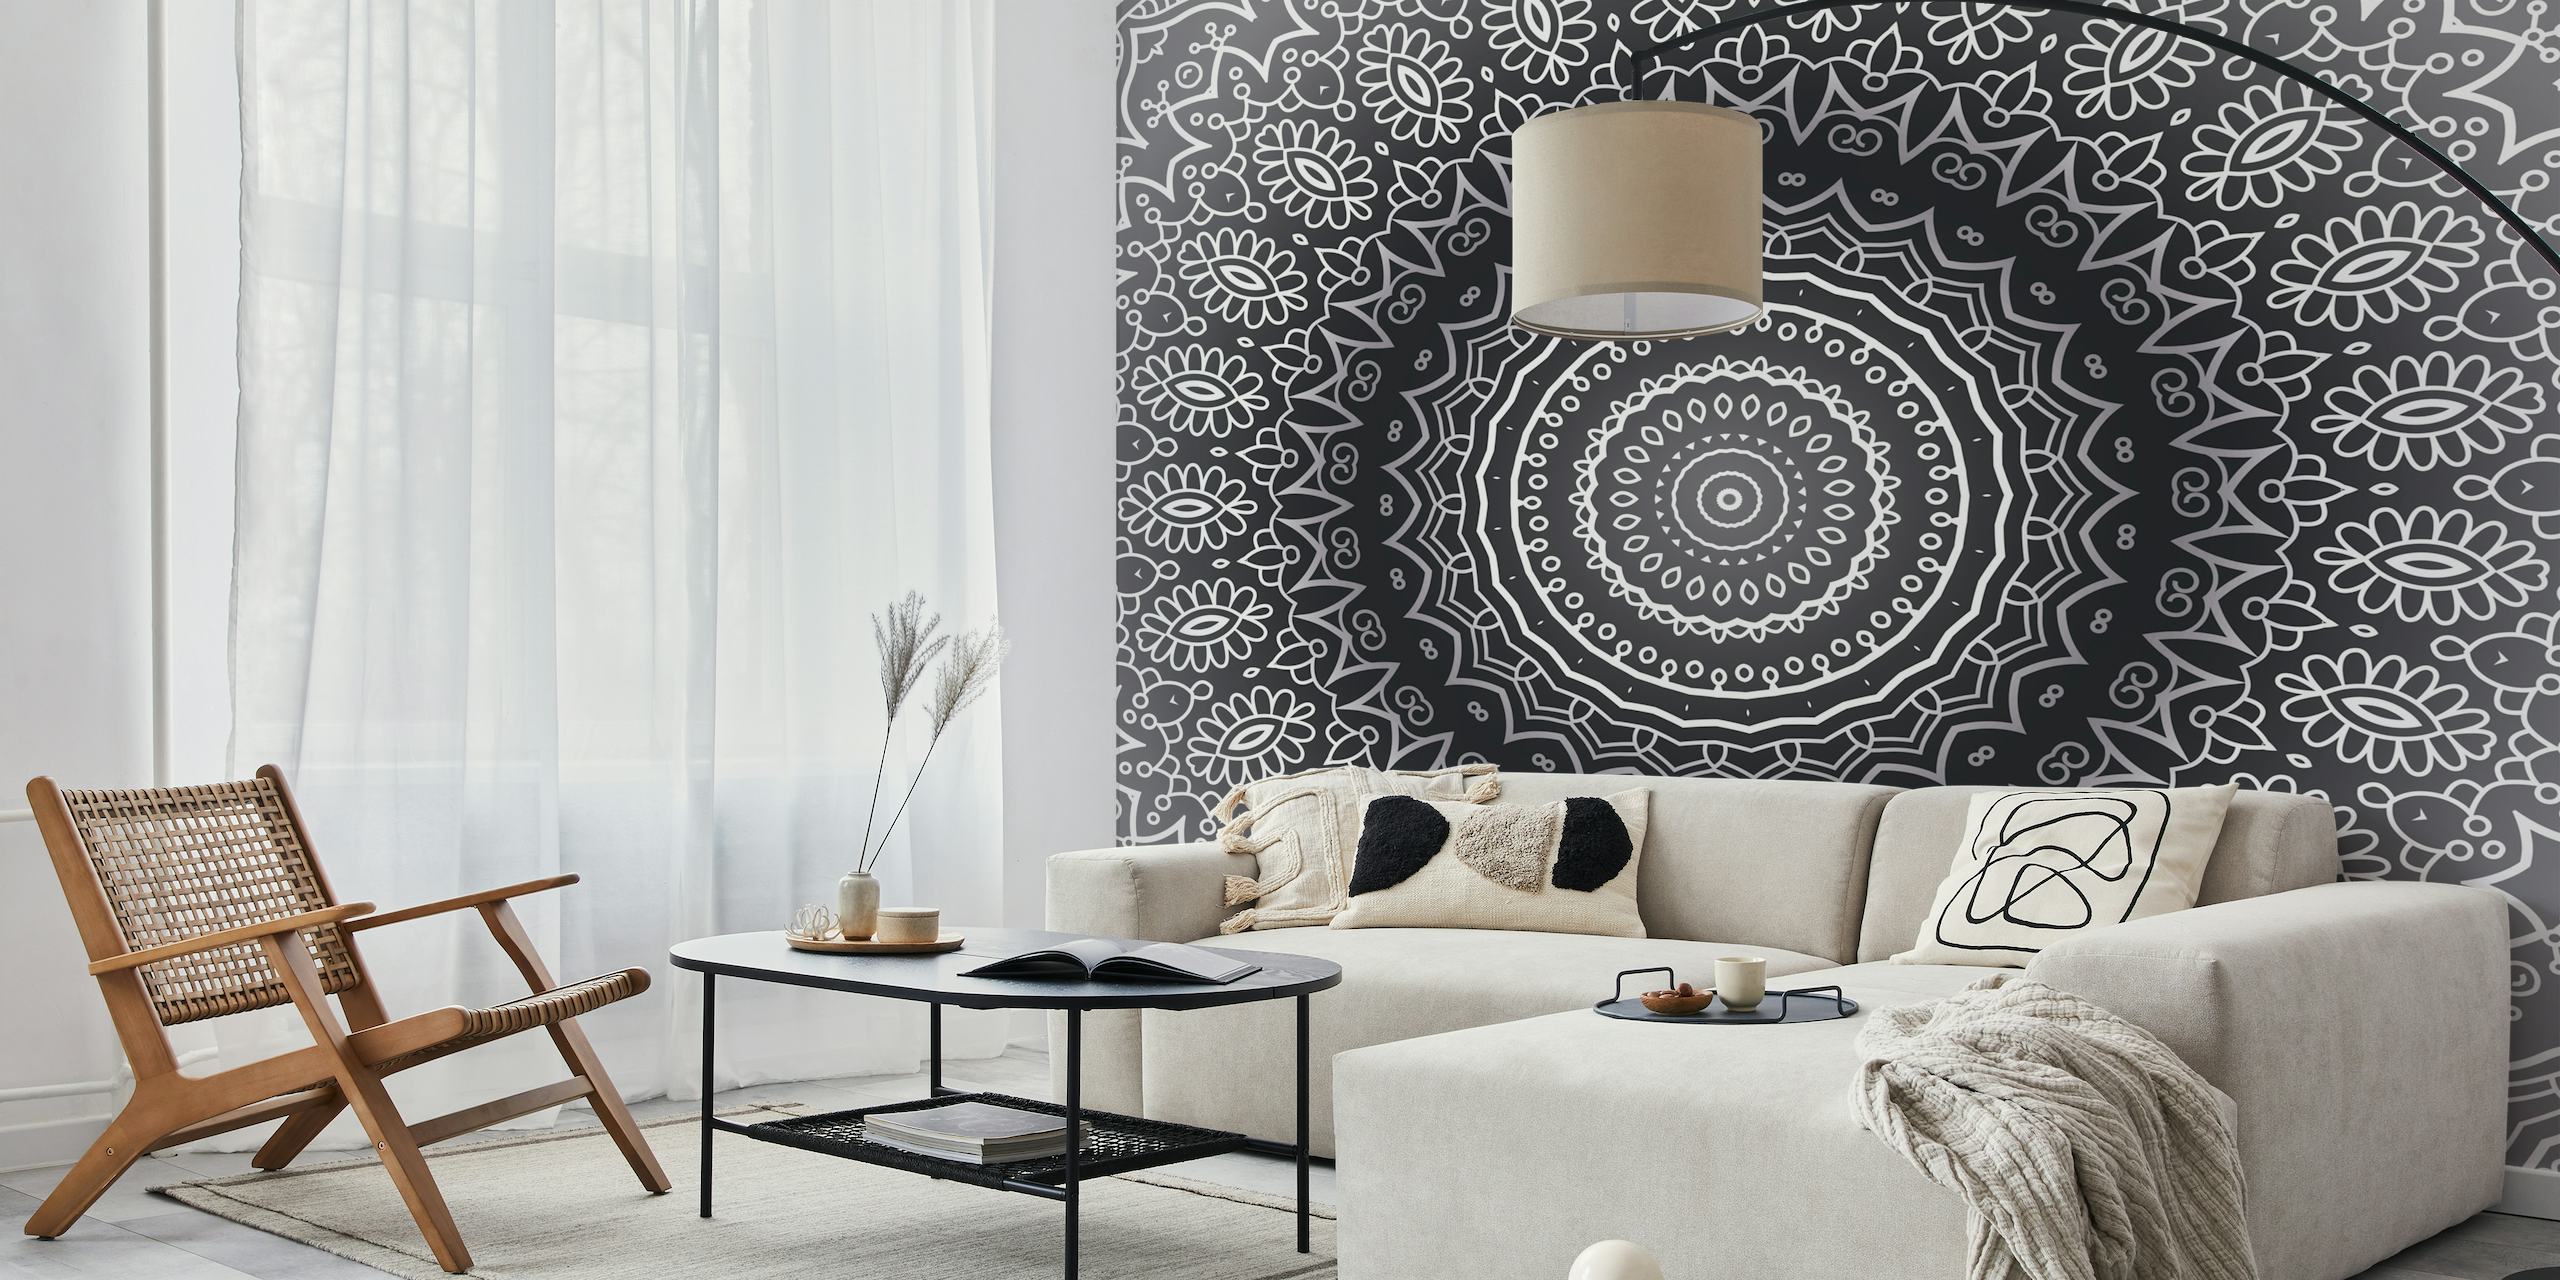 Graues Mandala-Wandbild mit komplizierten Mustern